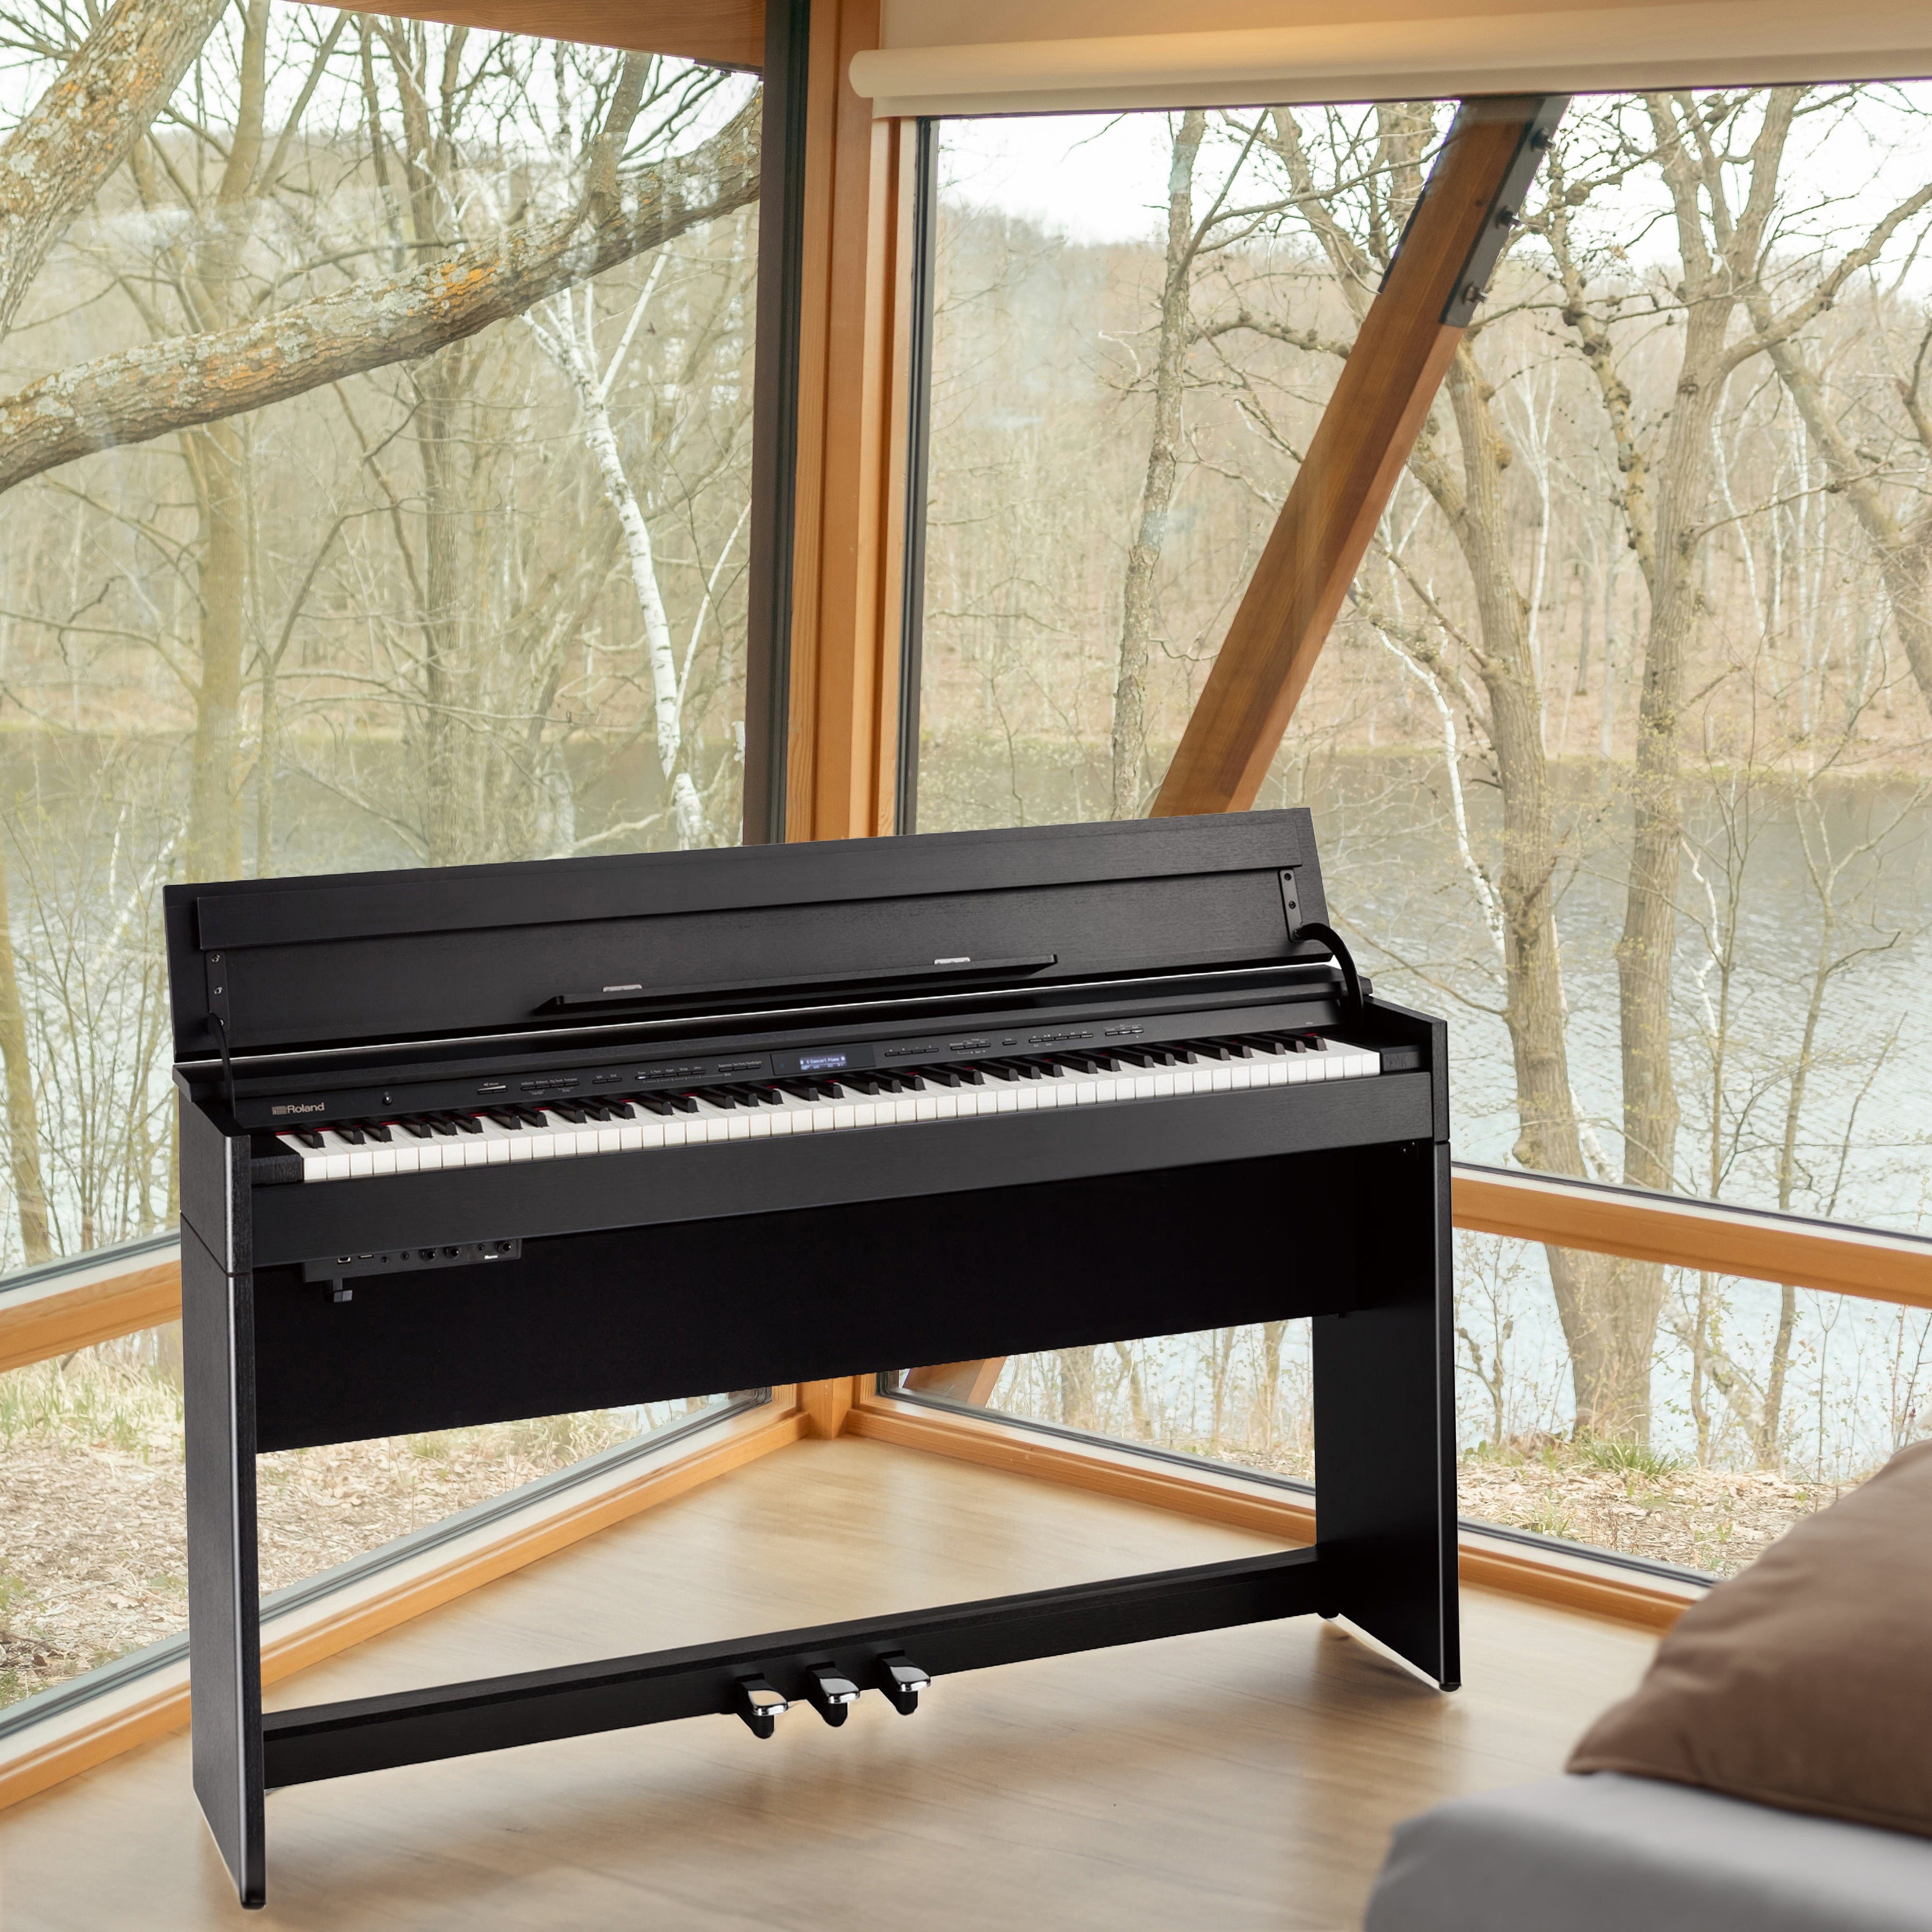 Roland DP603 Digital Piano - Contemporary Black - in a modern home